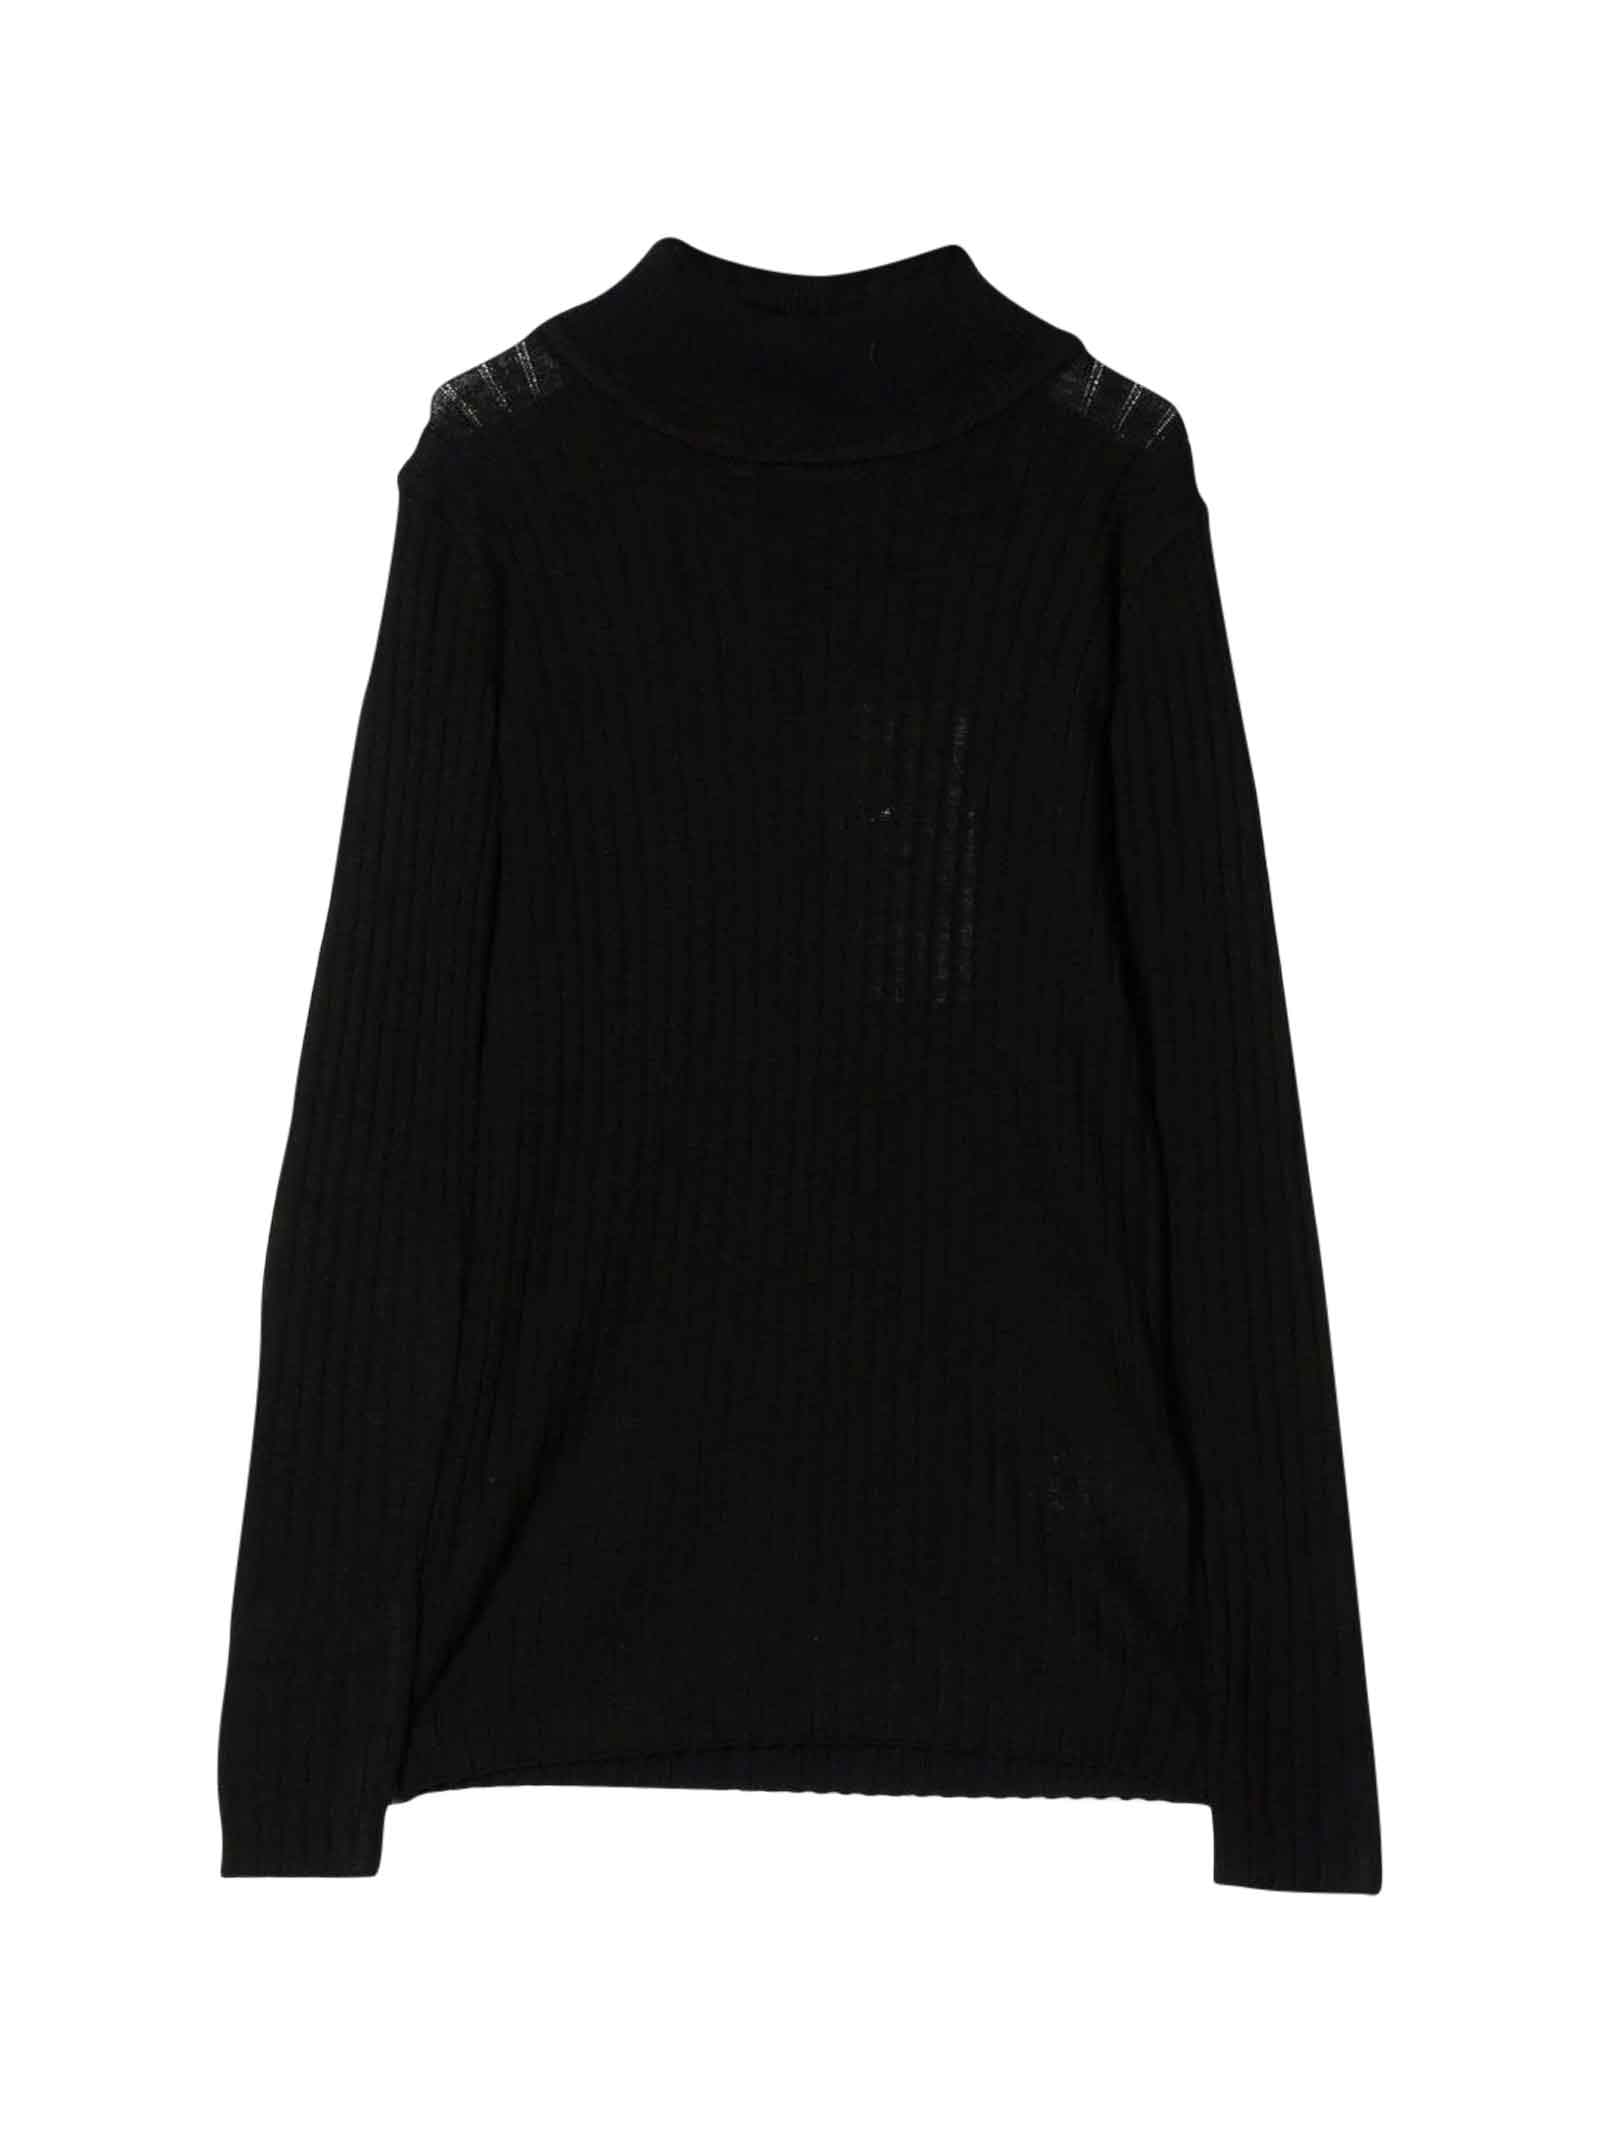 Molo Teen Black Striped Sweater